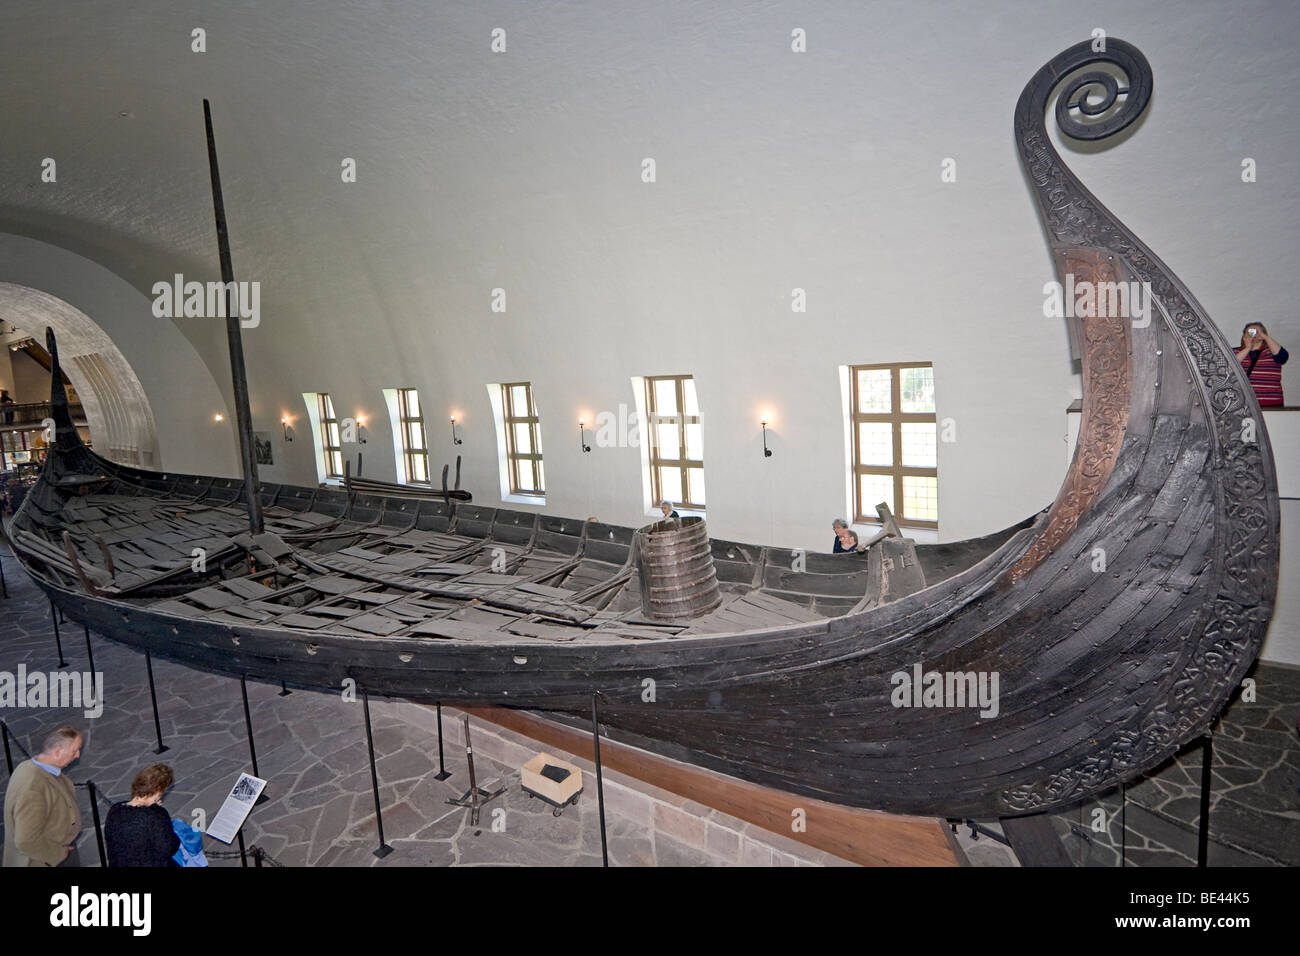 Oseburg Schiff im Wikingerschiff-Museum in Oslo, Norwegen. Stockfoto